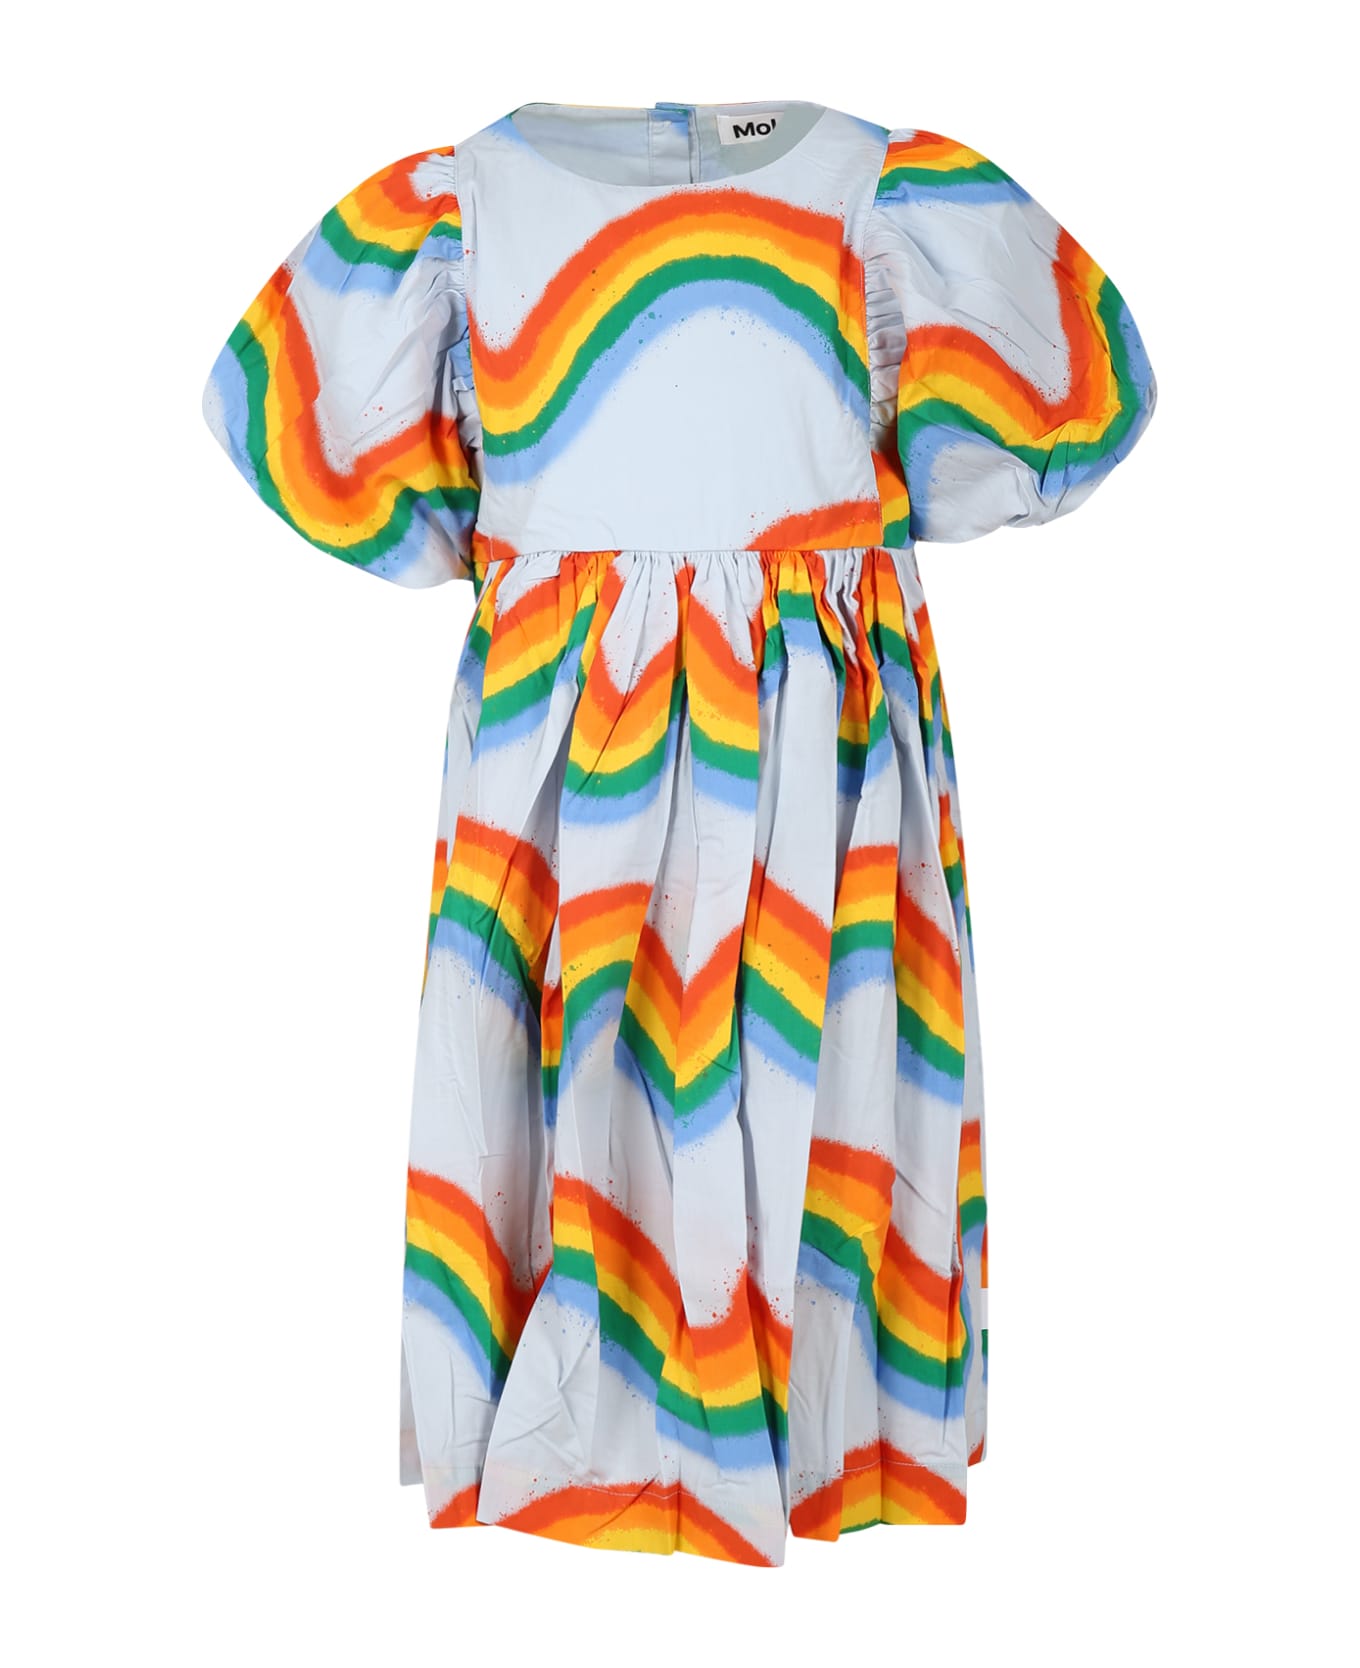 Molo Sky Blue Casual Dress For Girl With Rainbow - Light Blue